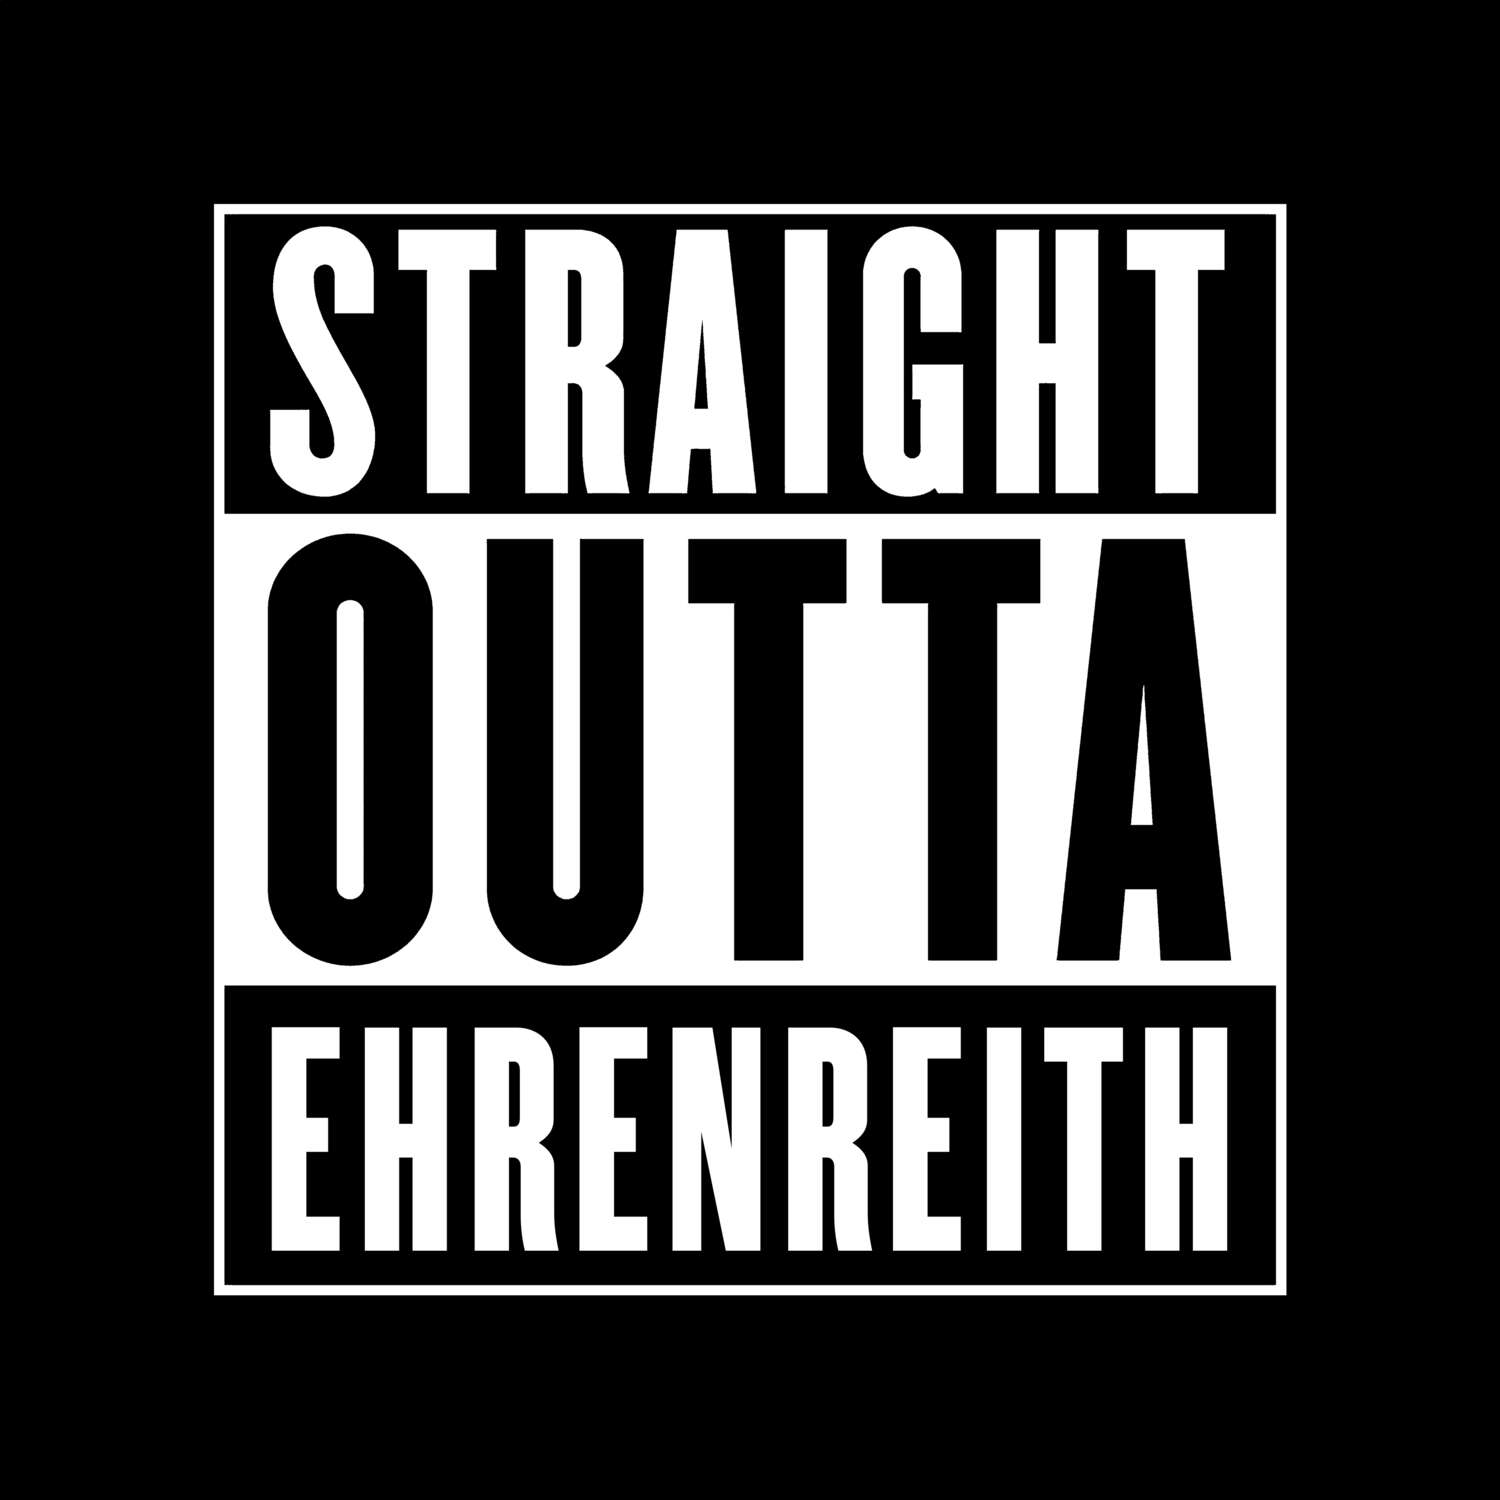 Ehrenreith T-Shirt »Straight Outta«